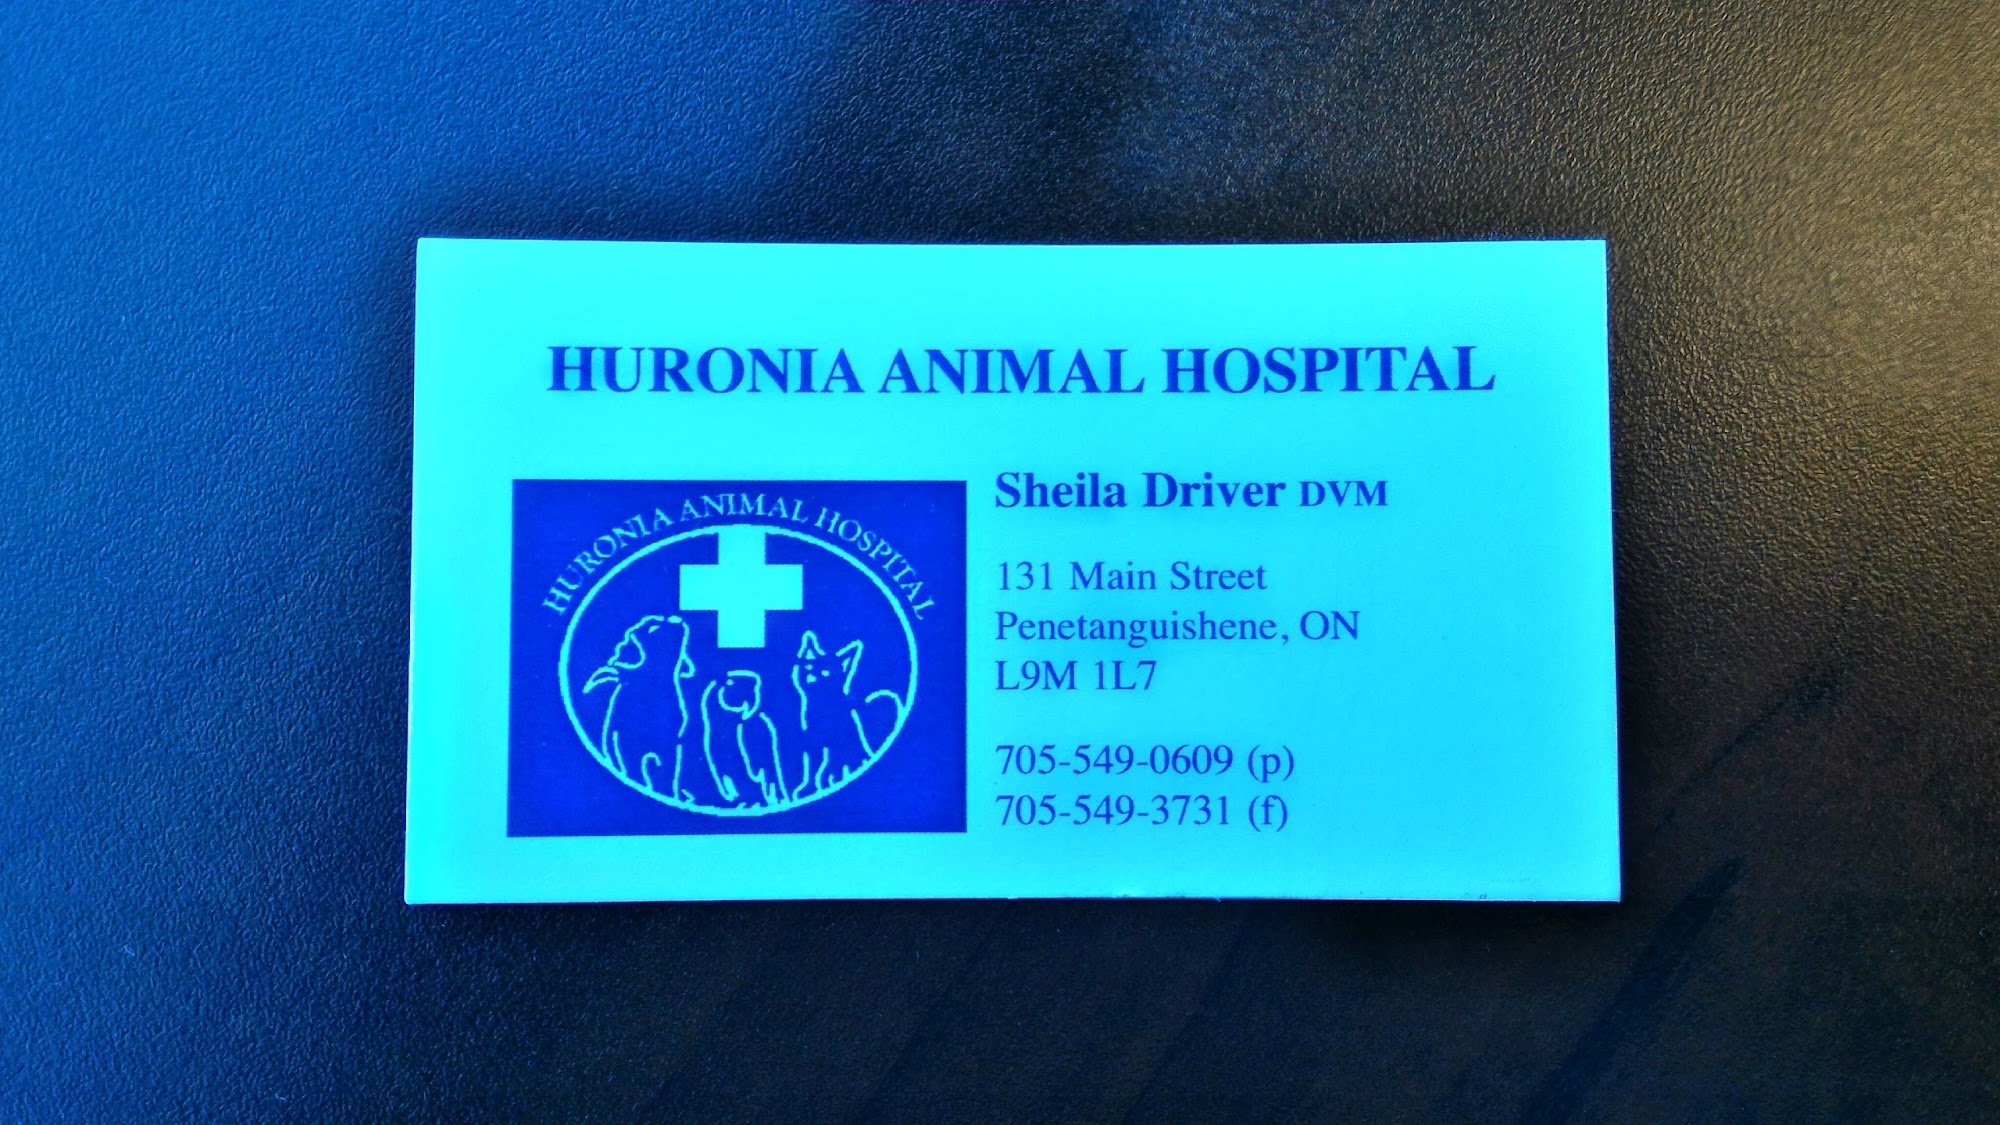 Huronia Animal Hospital 131 Main St, Penetanguishene Ontario L9M 1L7